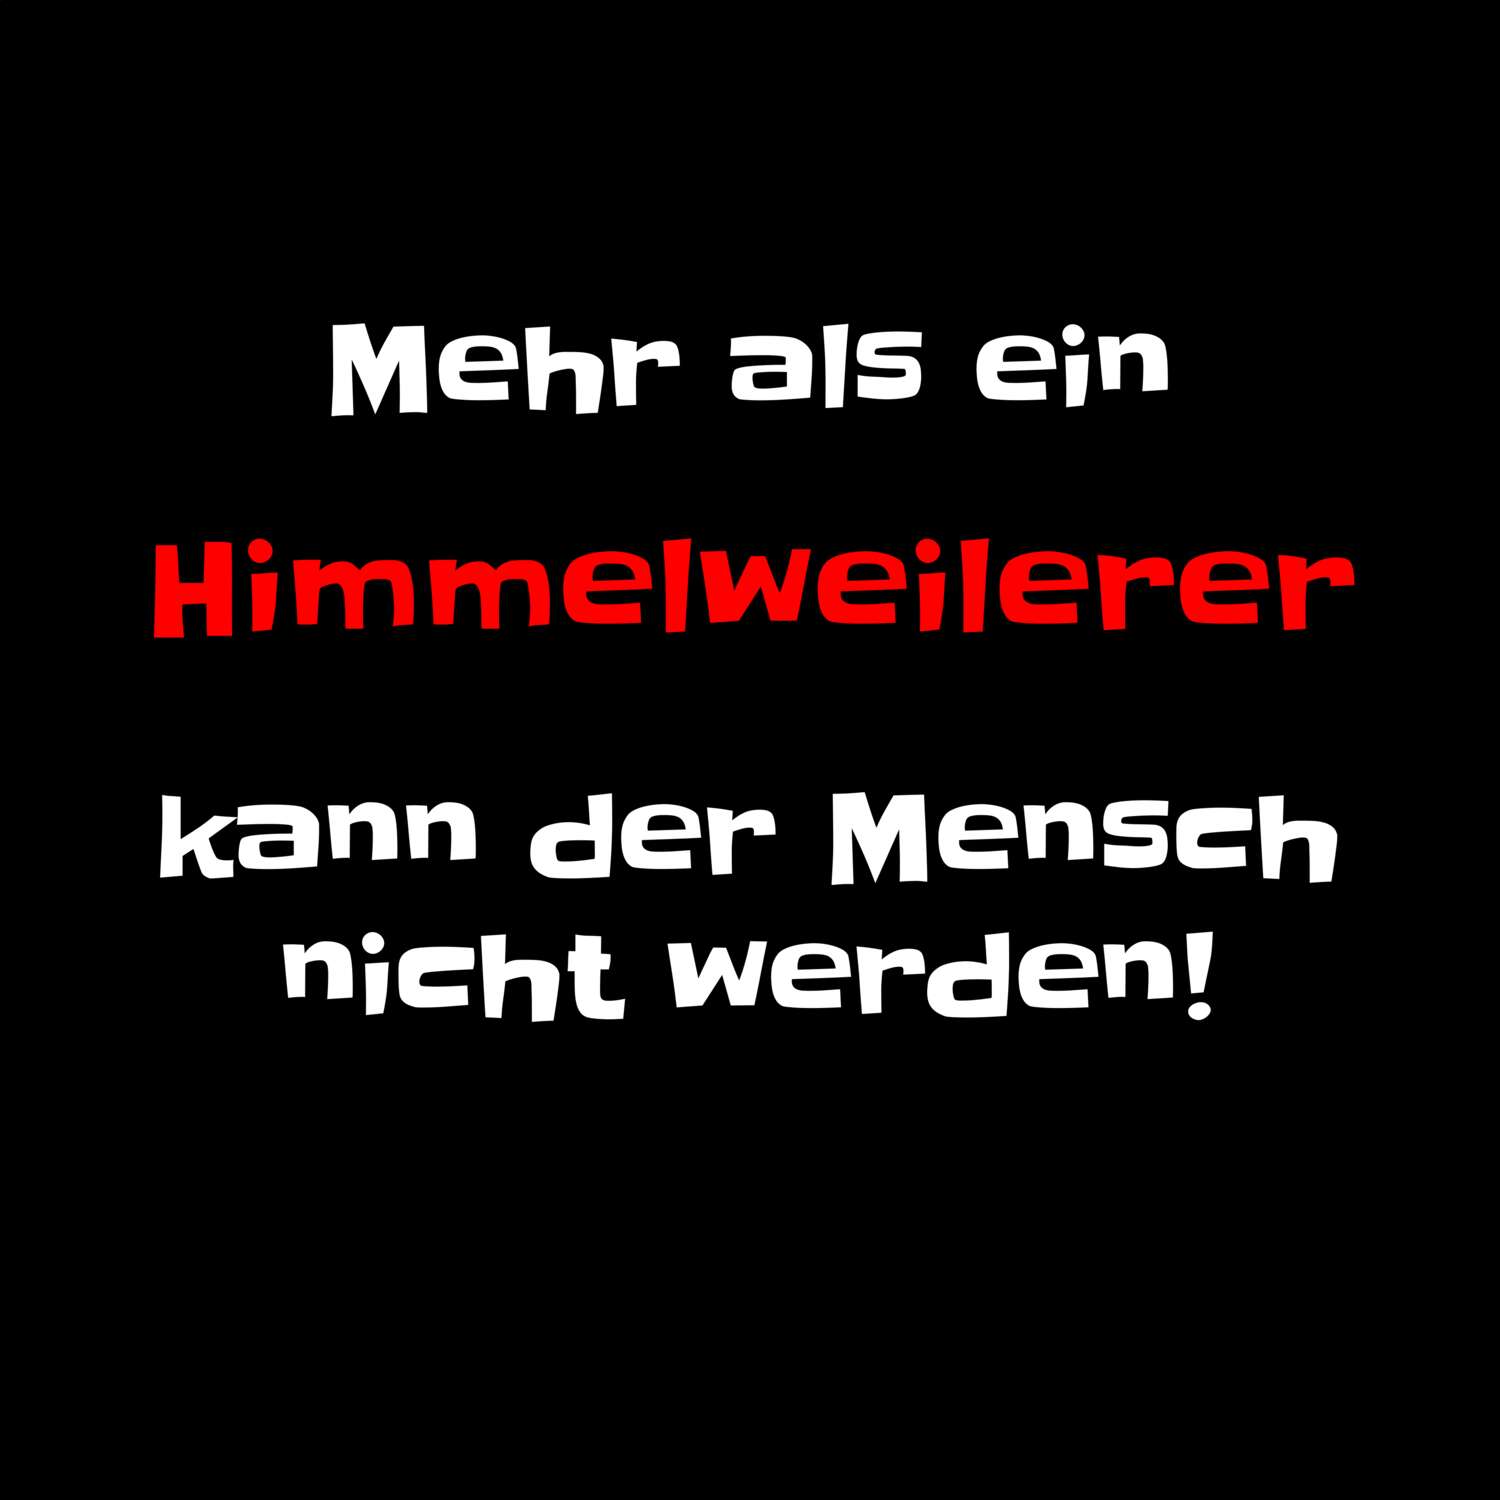 Himmelweiler T-Shirt »Mehr als ein«